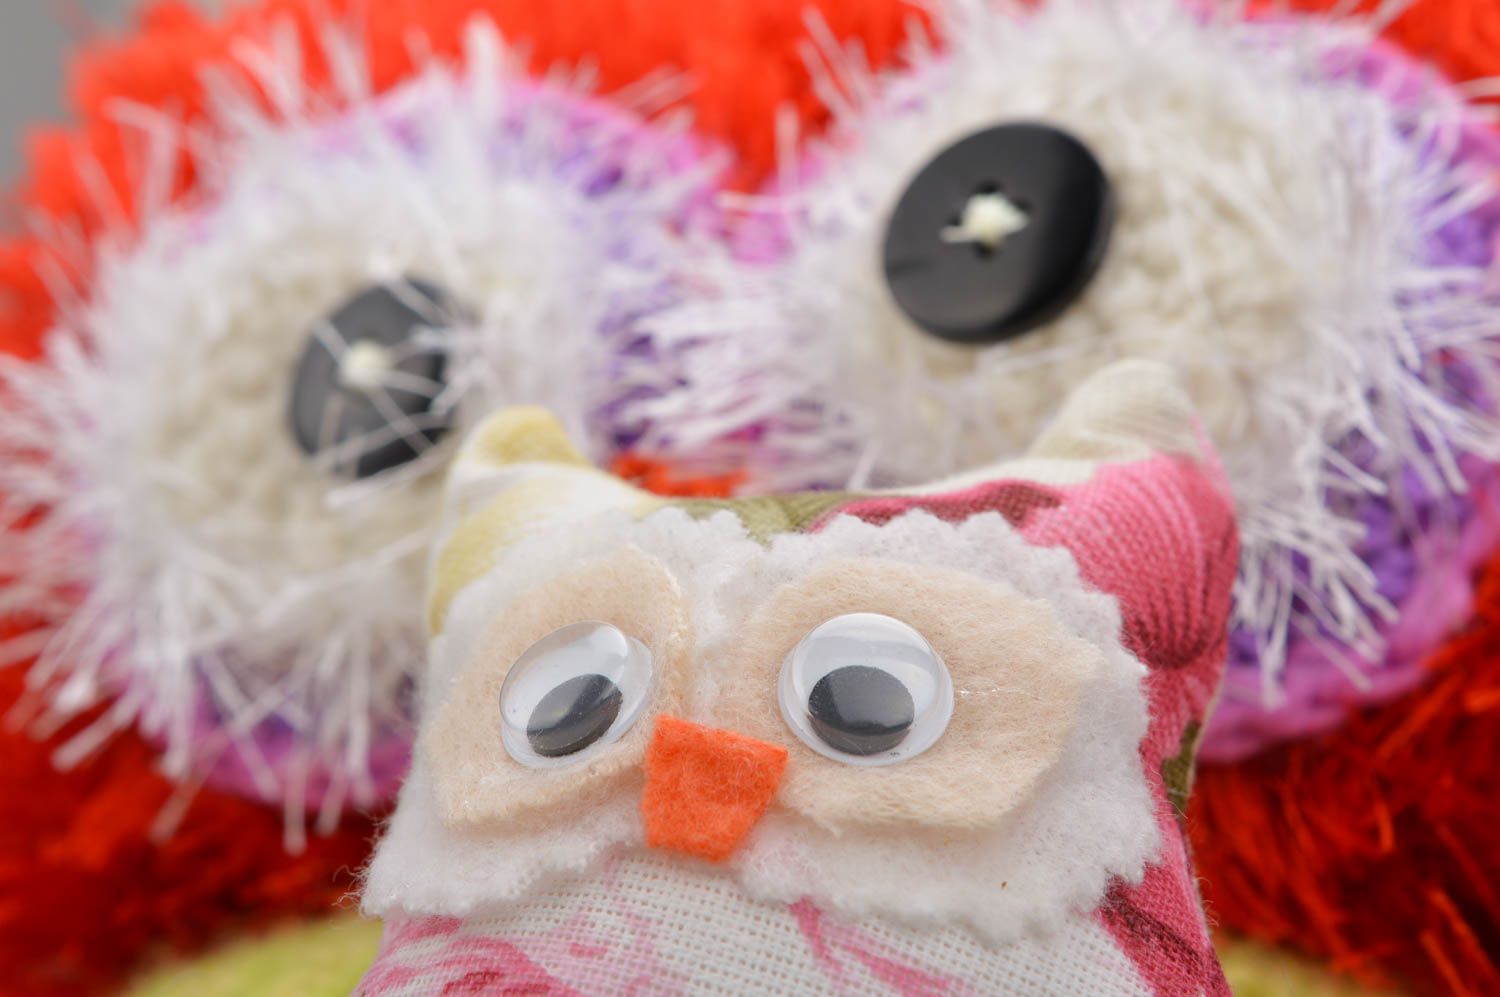 Handmade stuffed owl toy decorative soft toy gift for baby nursery decor ideas photo 4